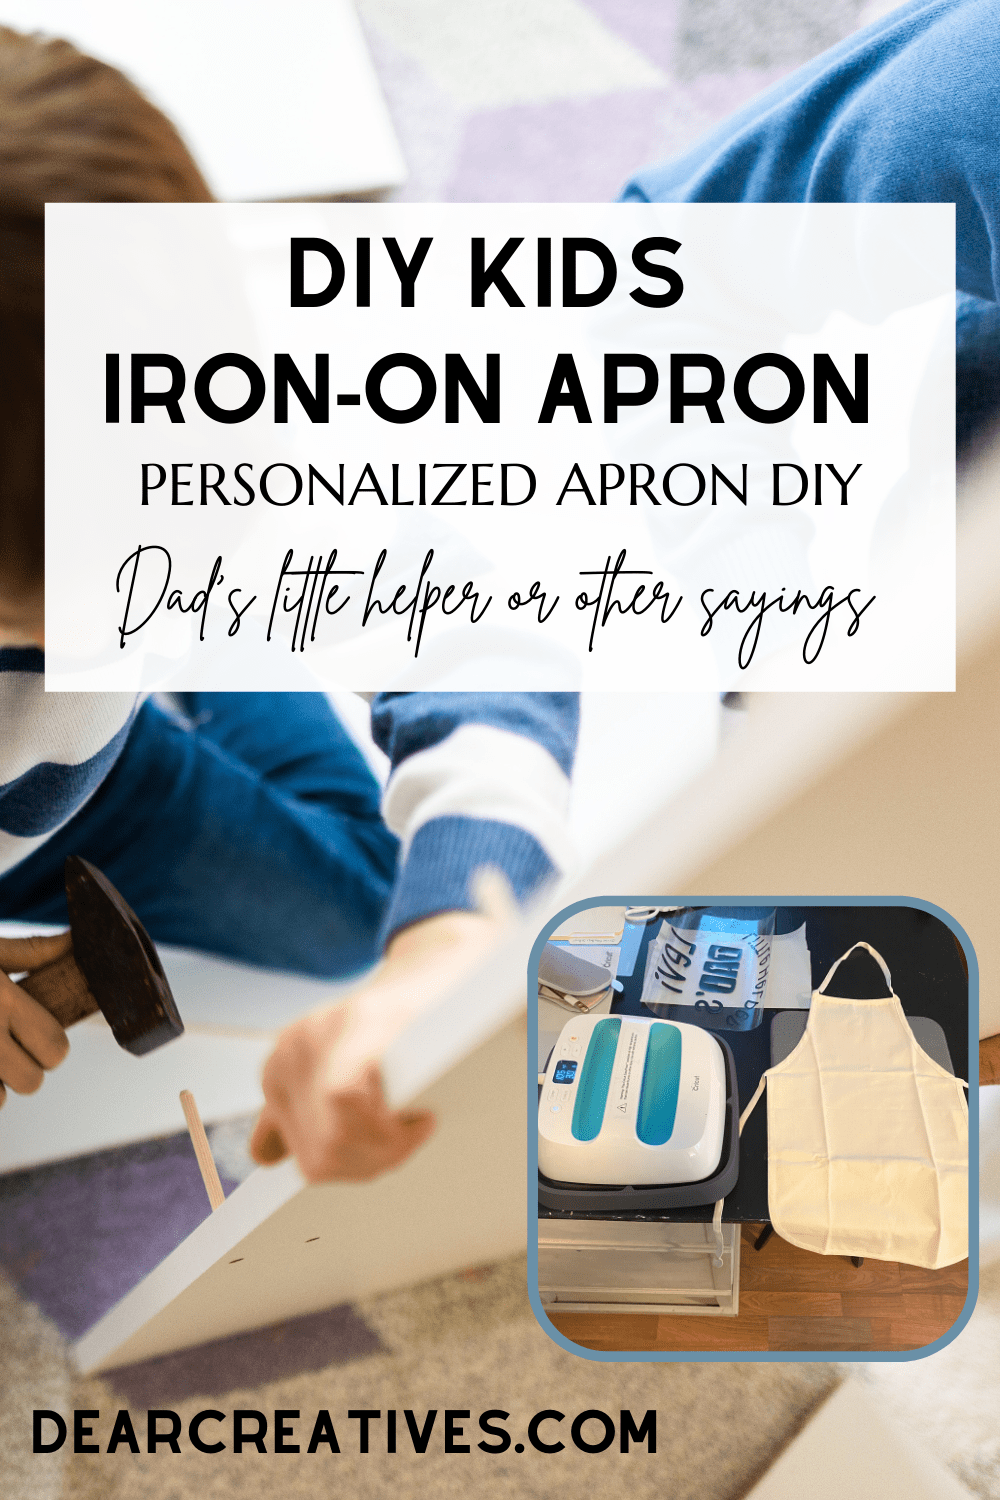 DIY Iron-On Apron – Personalize Aprons – Cricut Craft